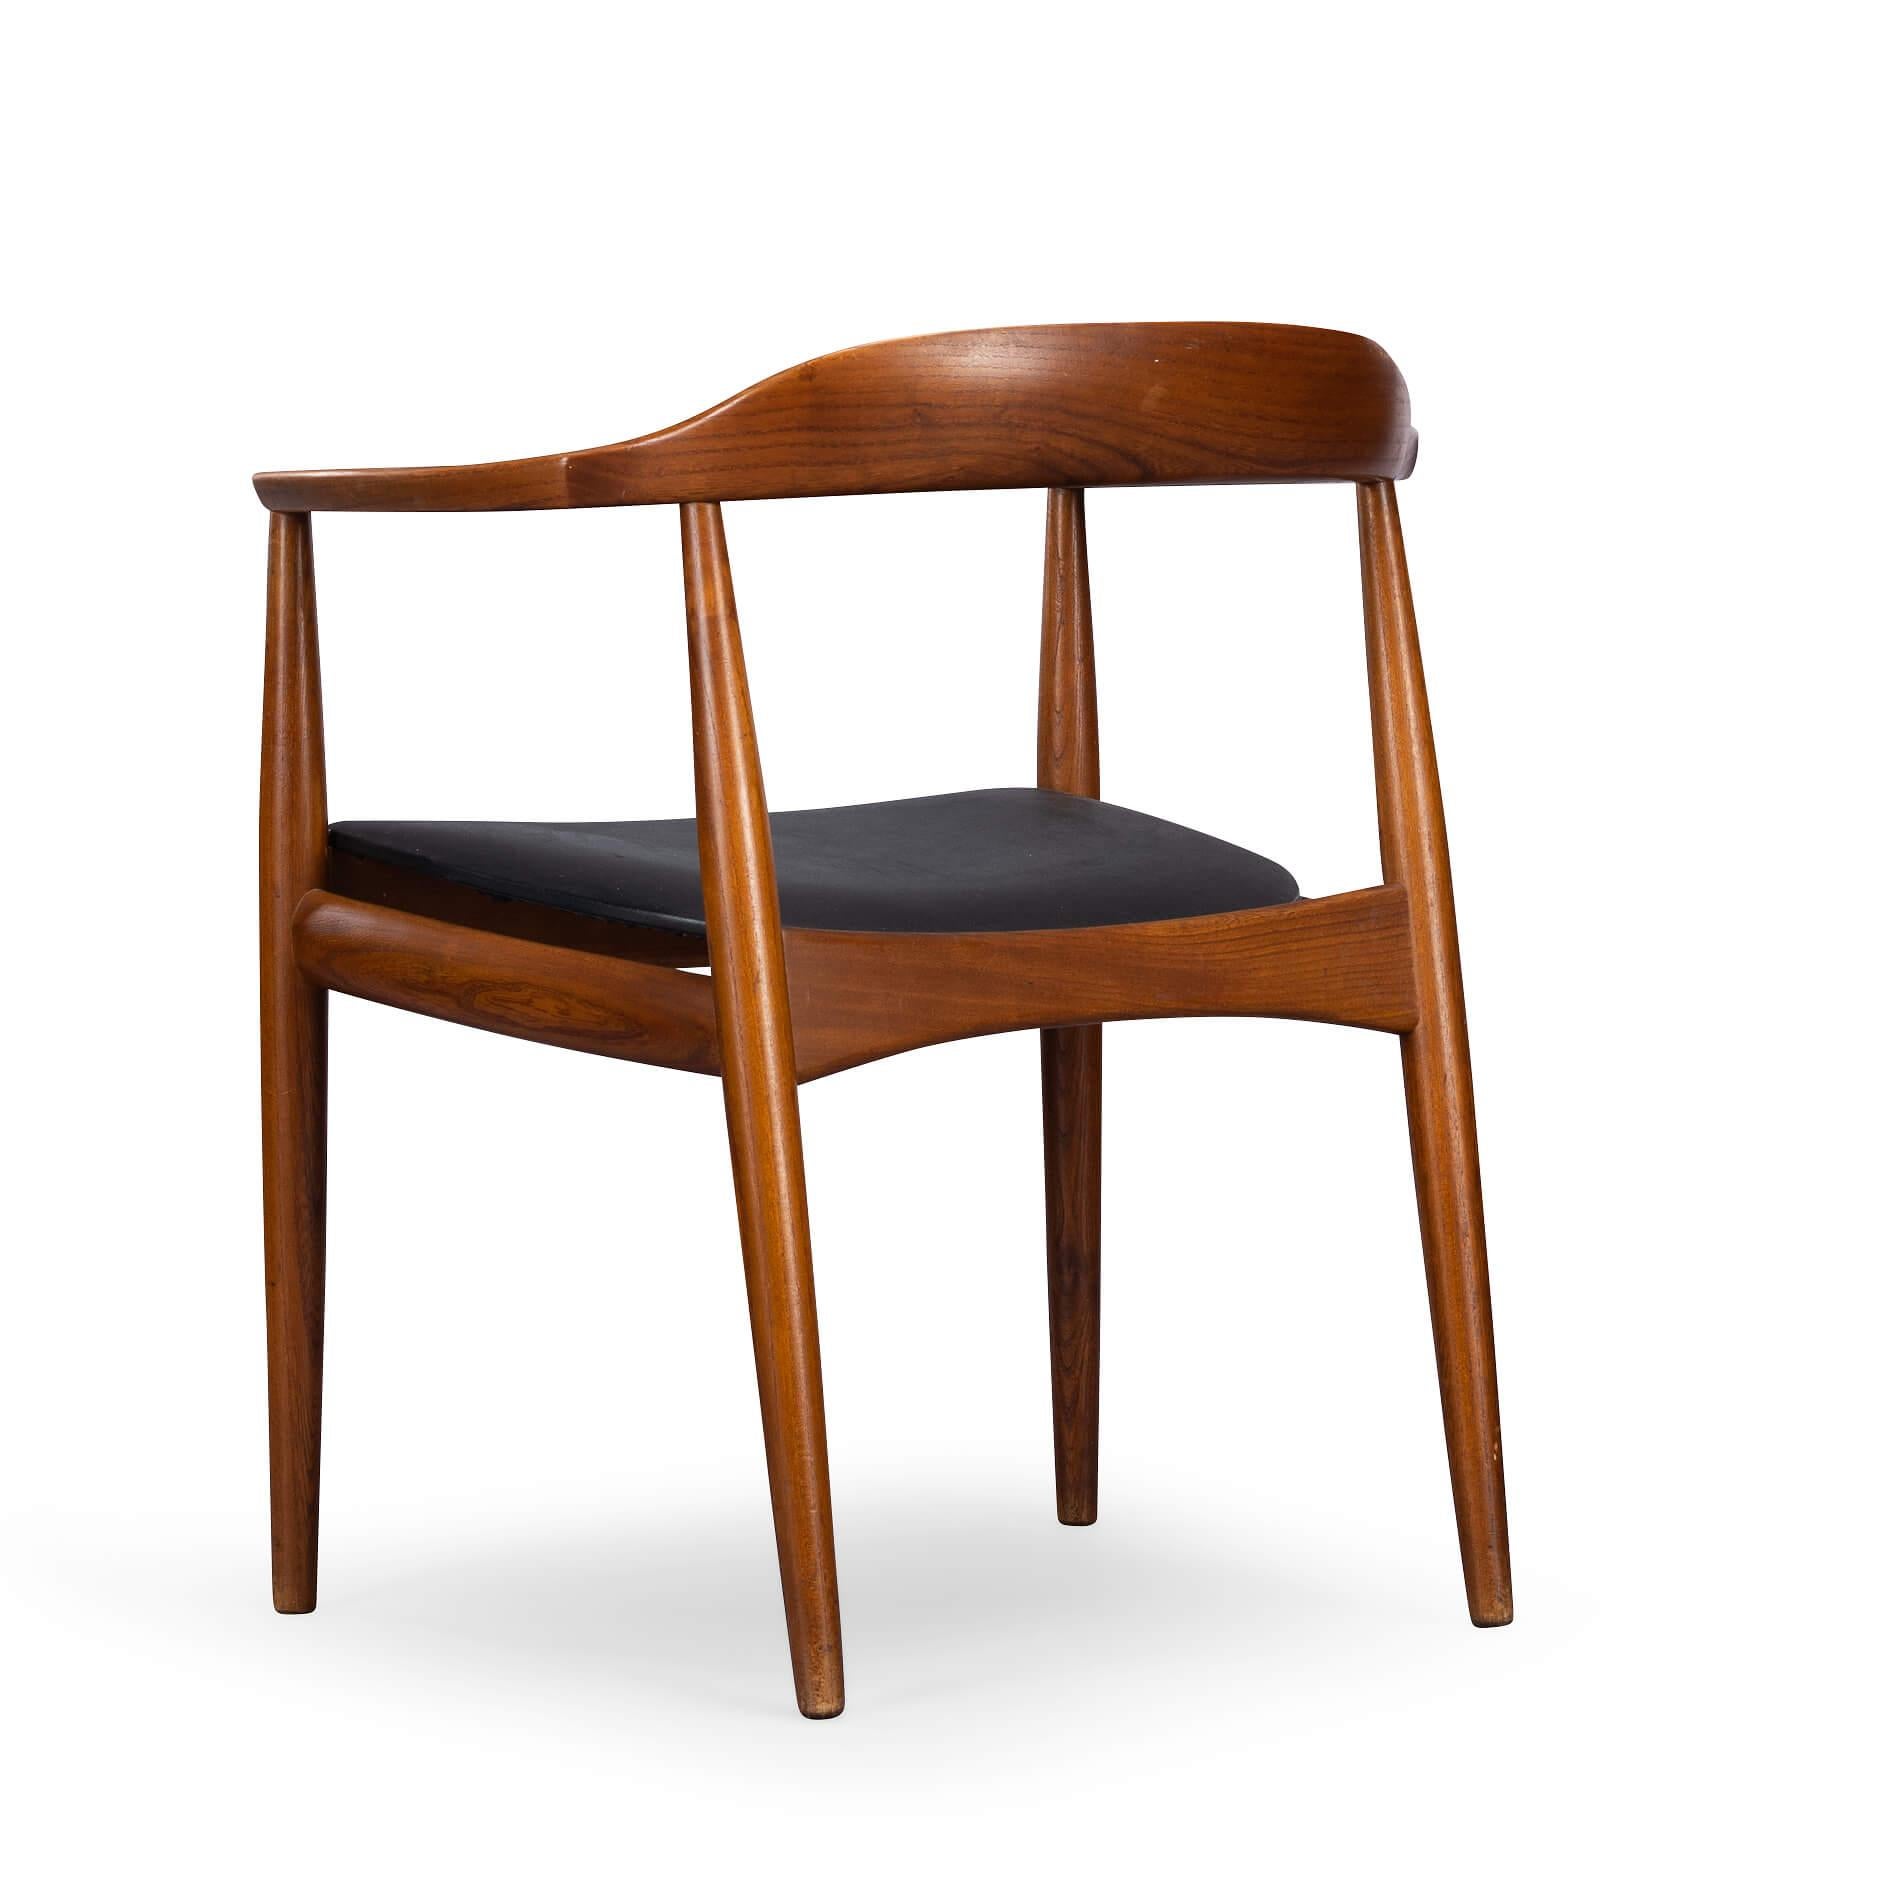 Mid-20th Century Danish Desk Chair in Elm Wood by Arne Wahl Iversen for N. Eilersen, 1960s For Sale